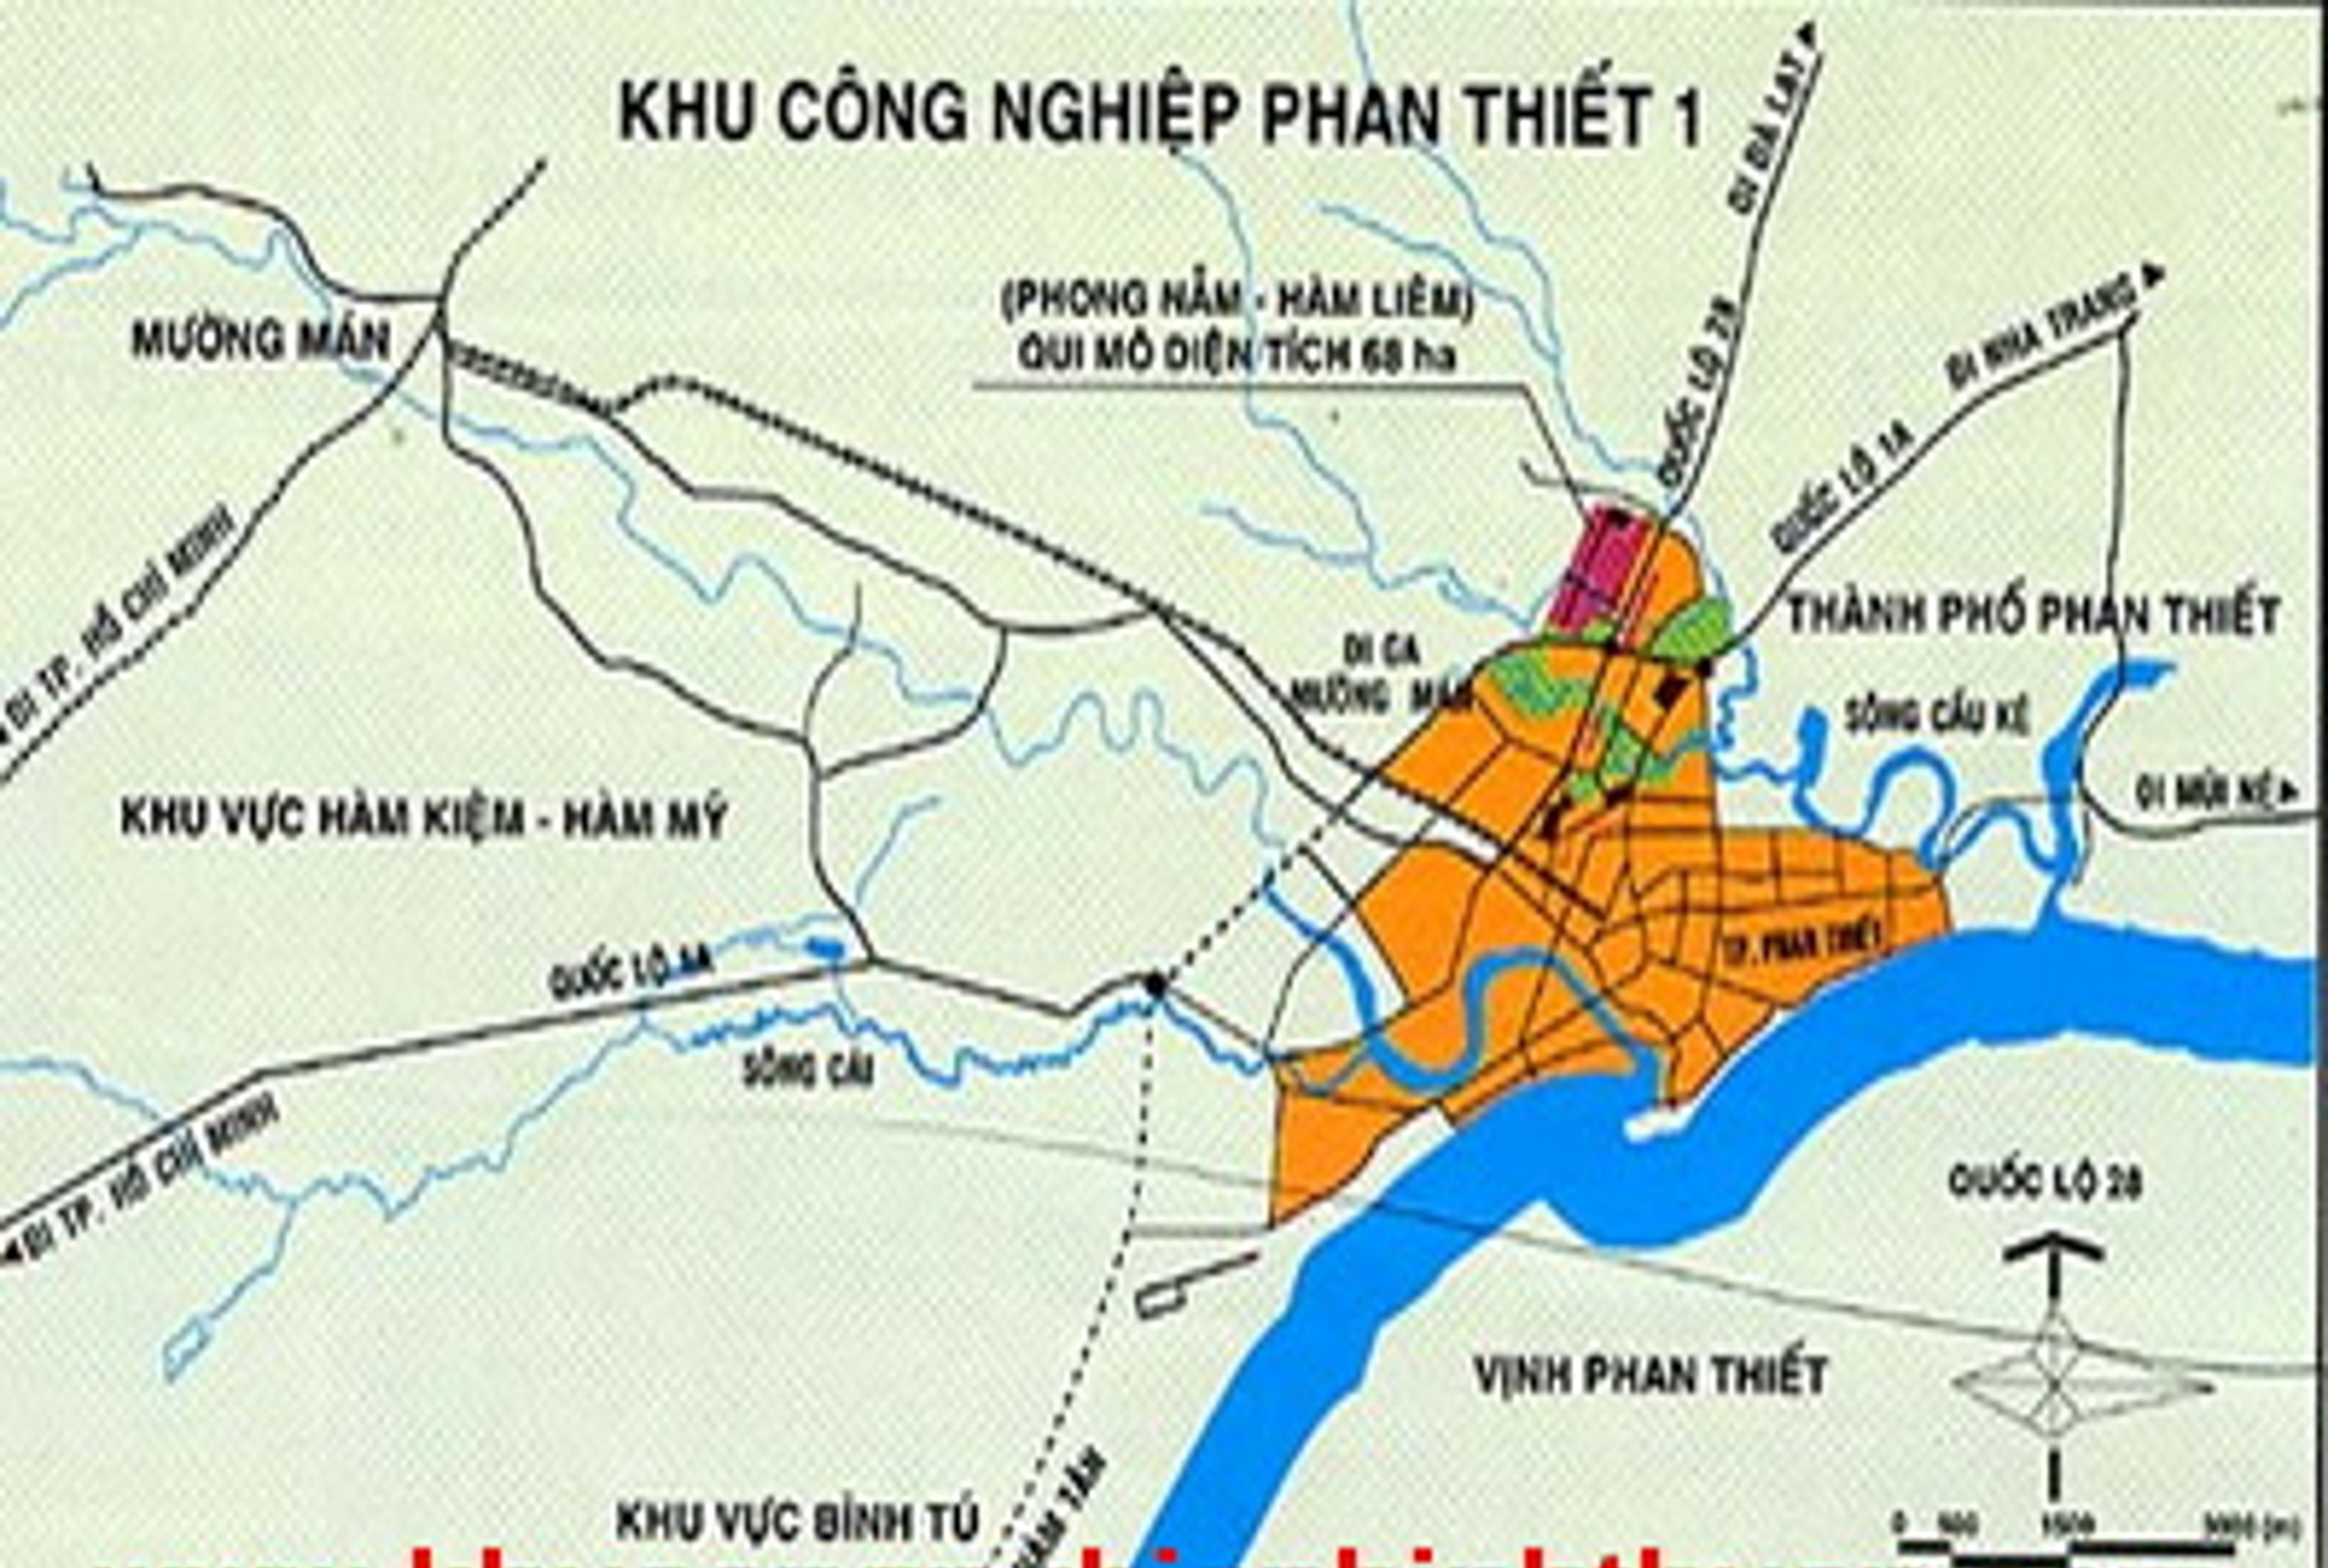 Phan Thiet 1 Industrial Park